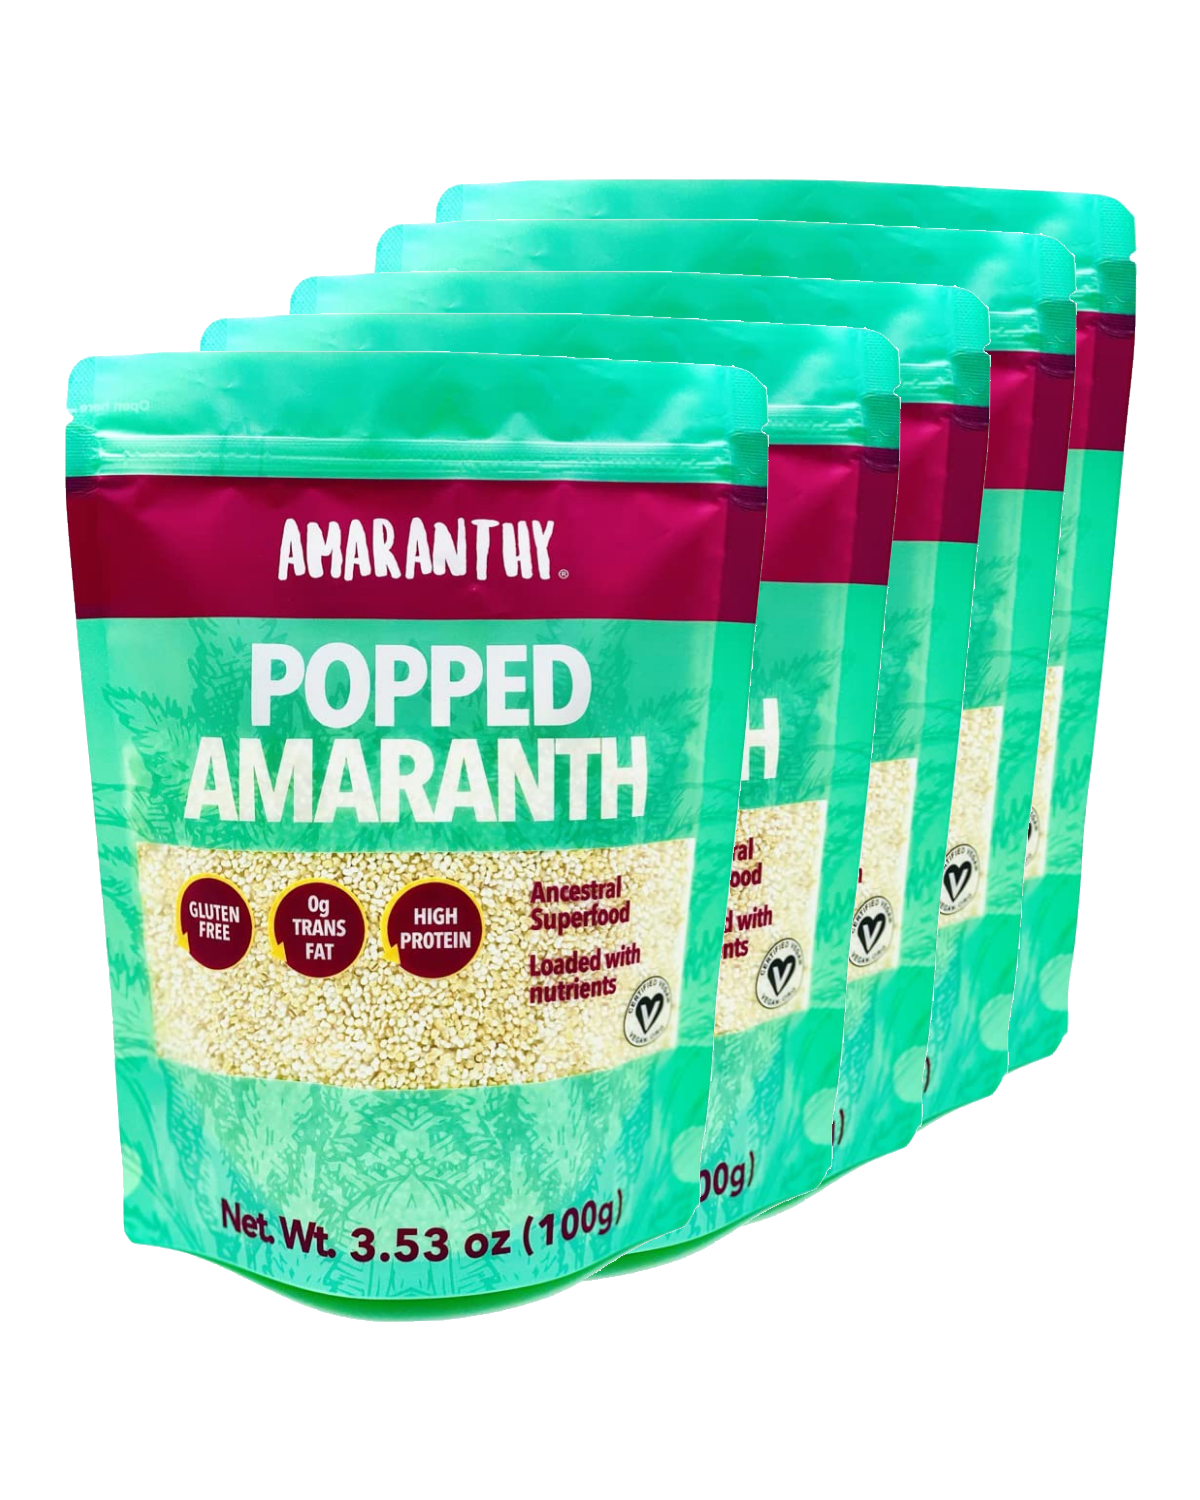 Popped Amaranth - 5 pack